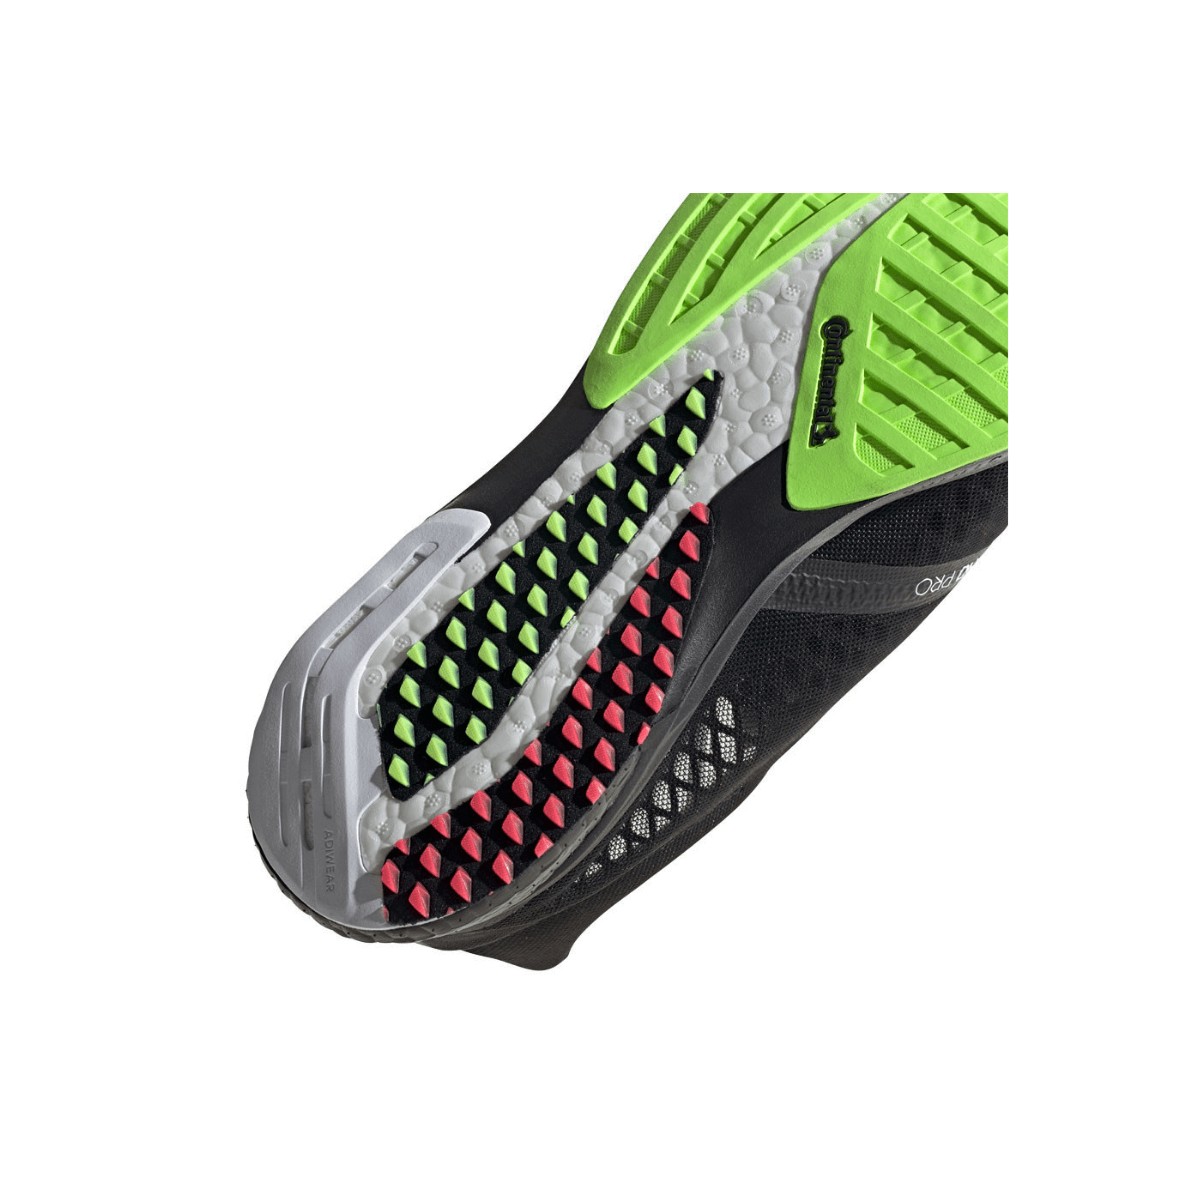 Adidas Adizero Pro Green AW20 Running Shoes